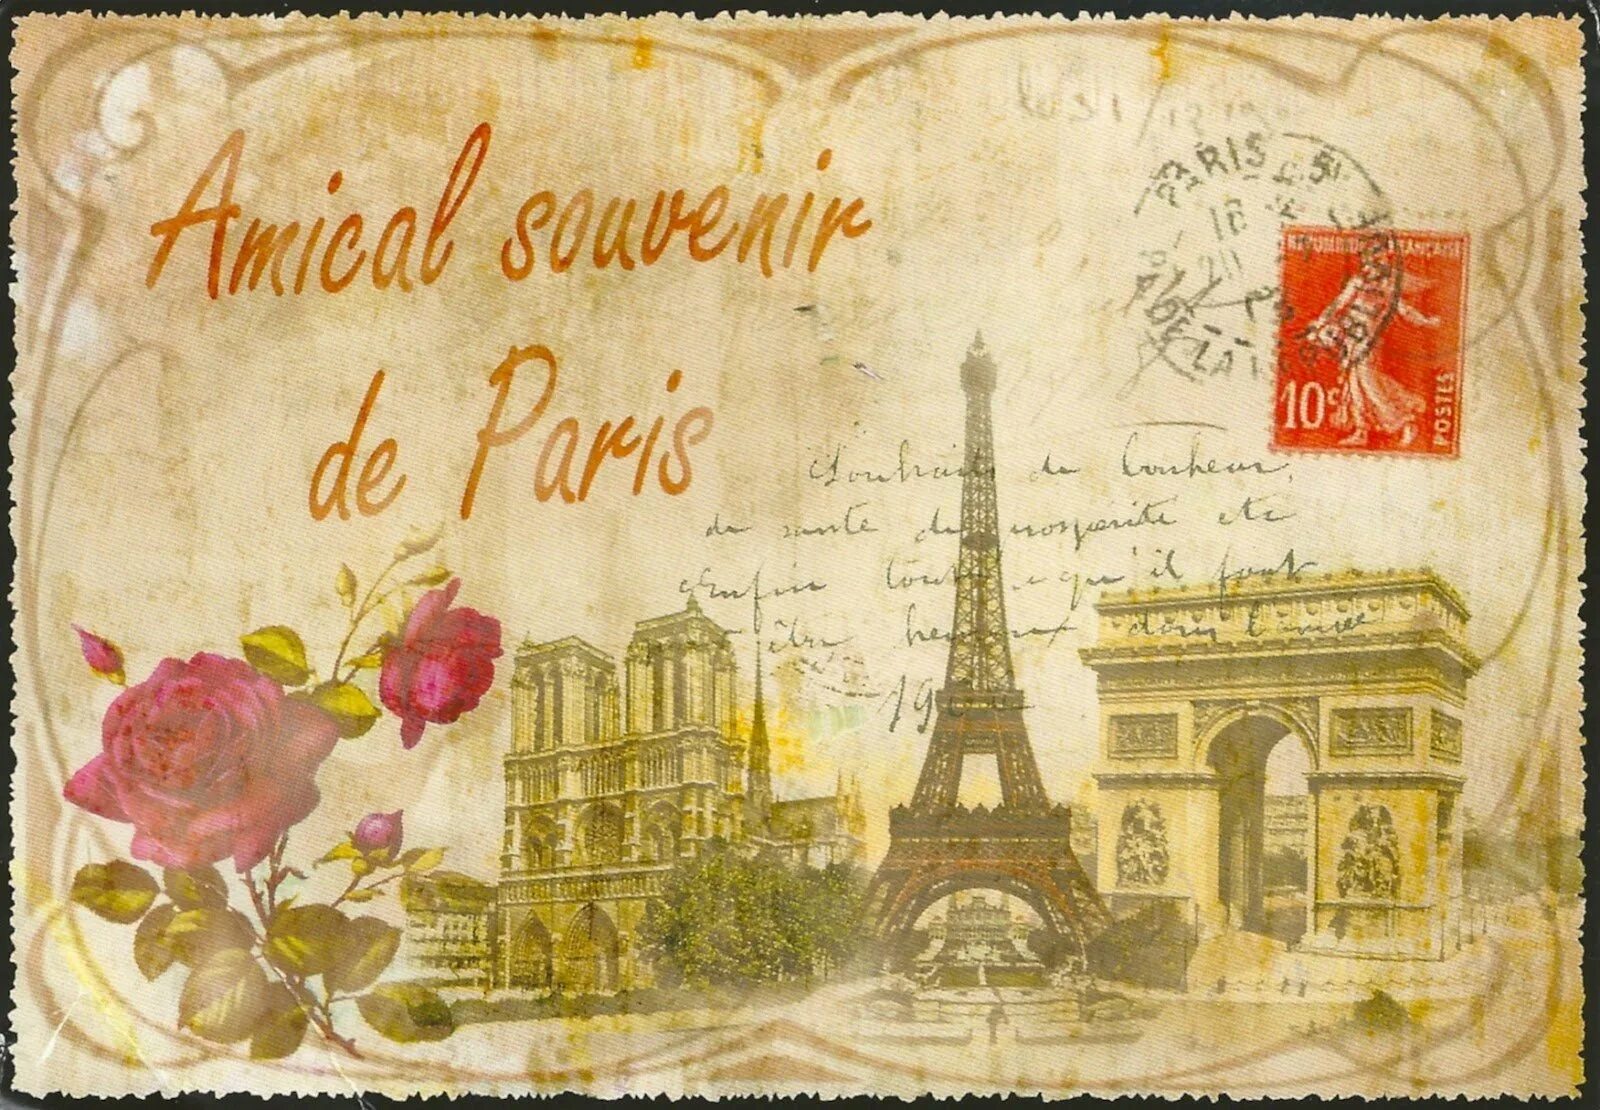 Века на французском языке. Открытка из Парижа. Первая французская открытка. Открытка в парижском стиле. Открытка из Франции.